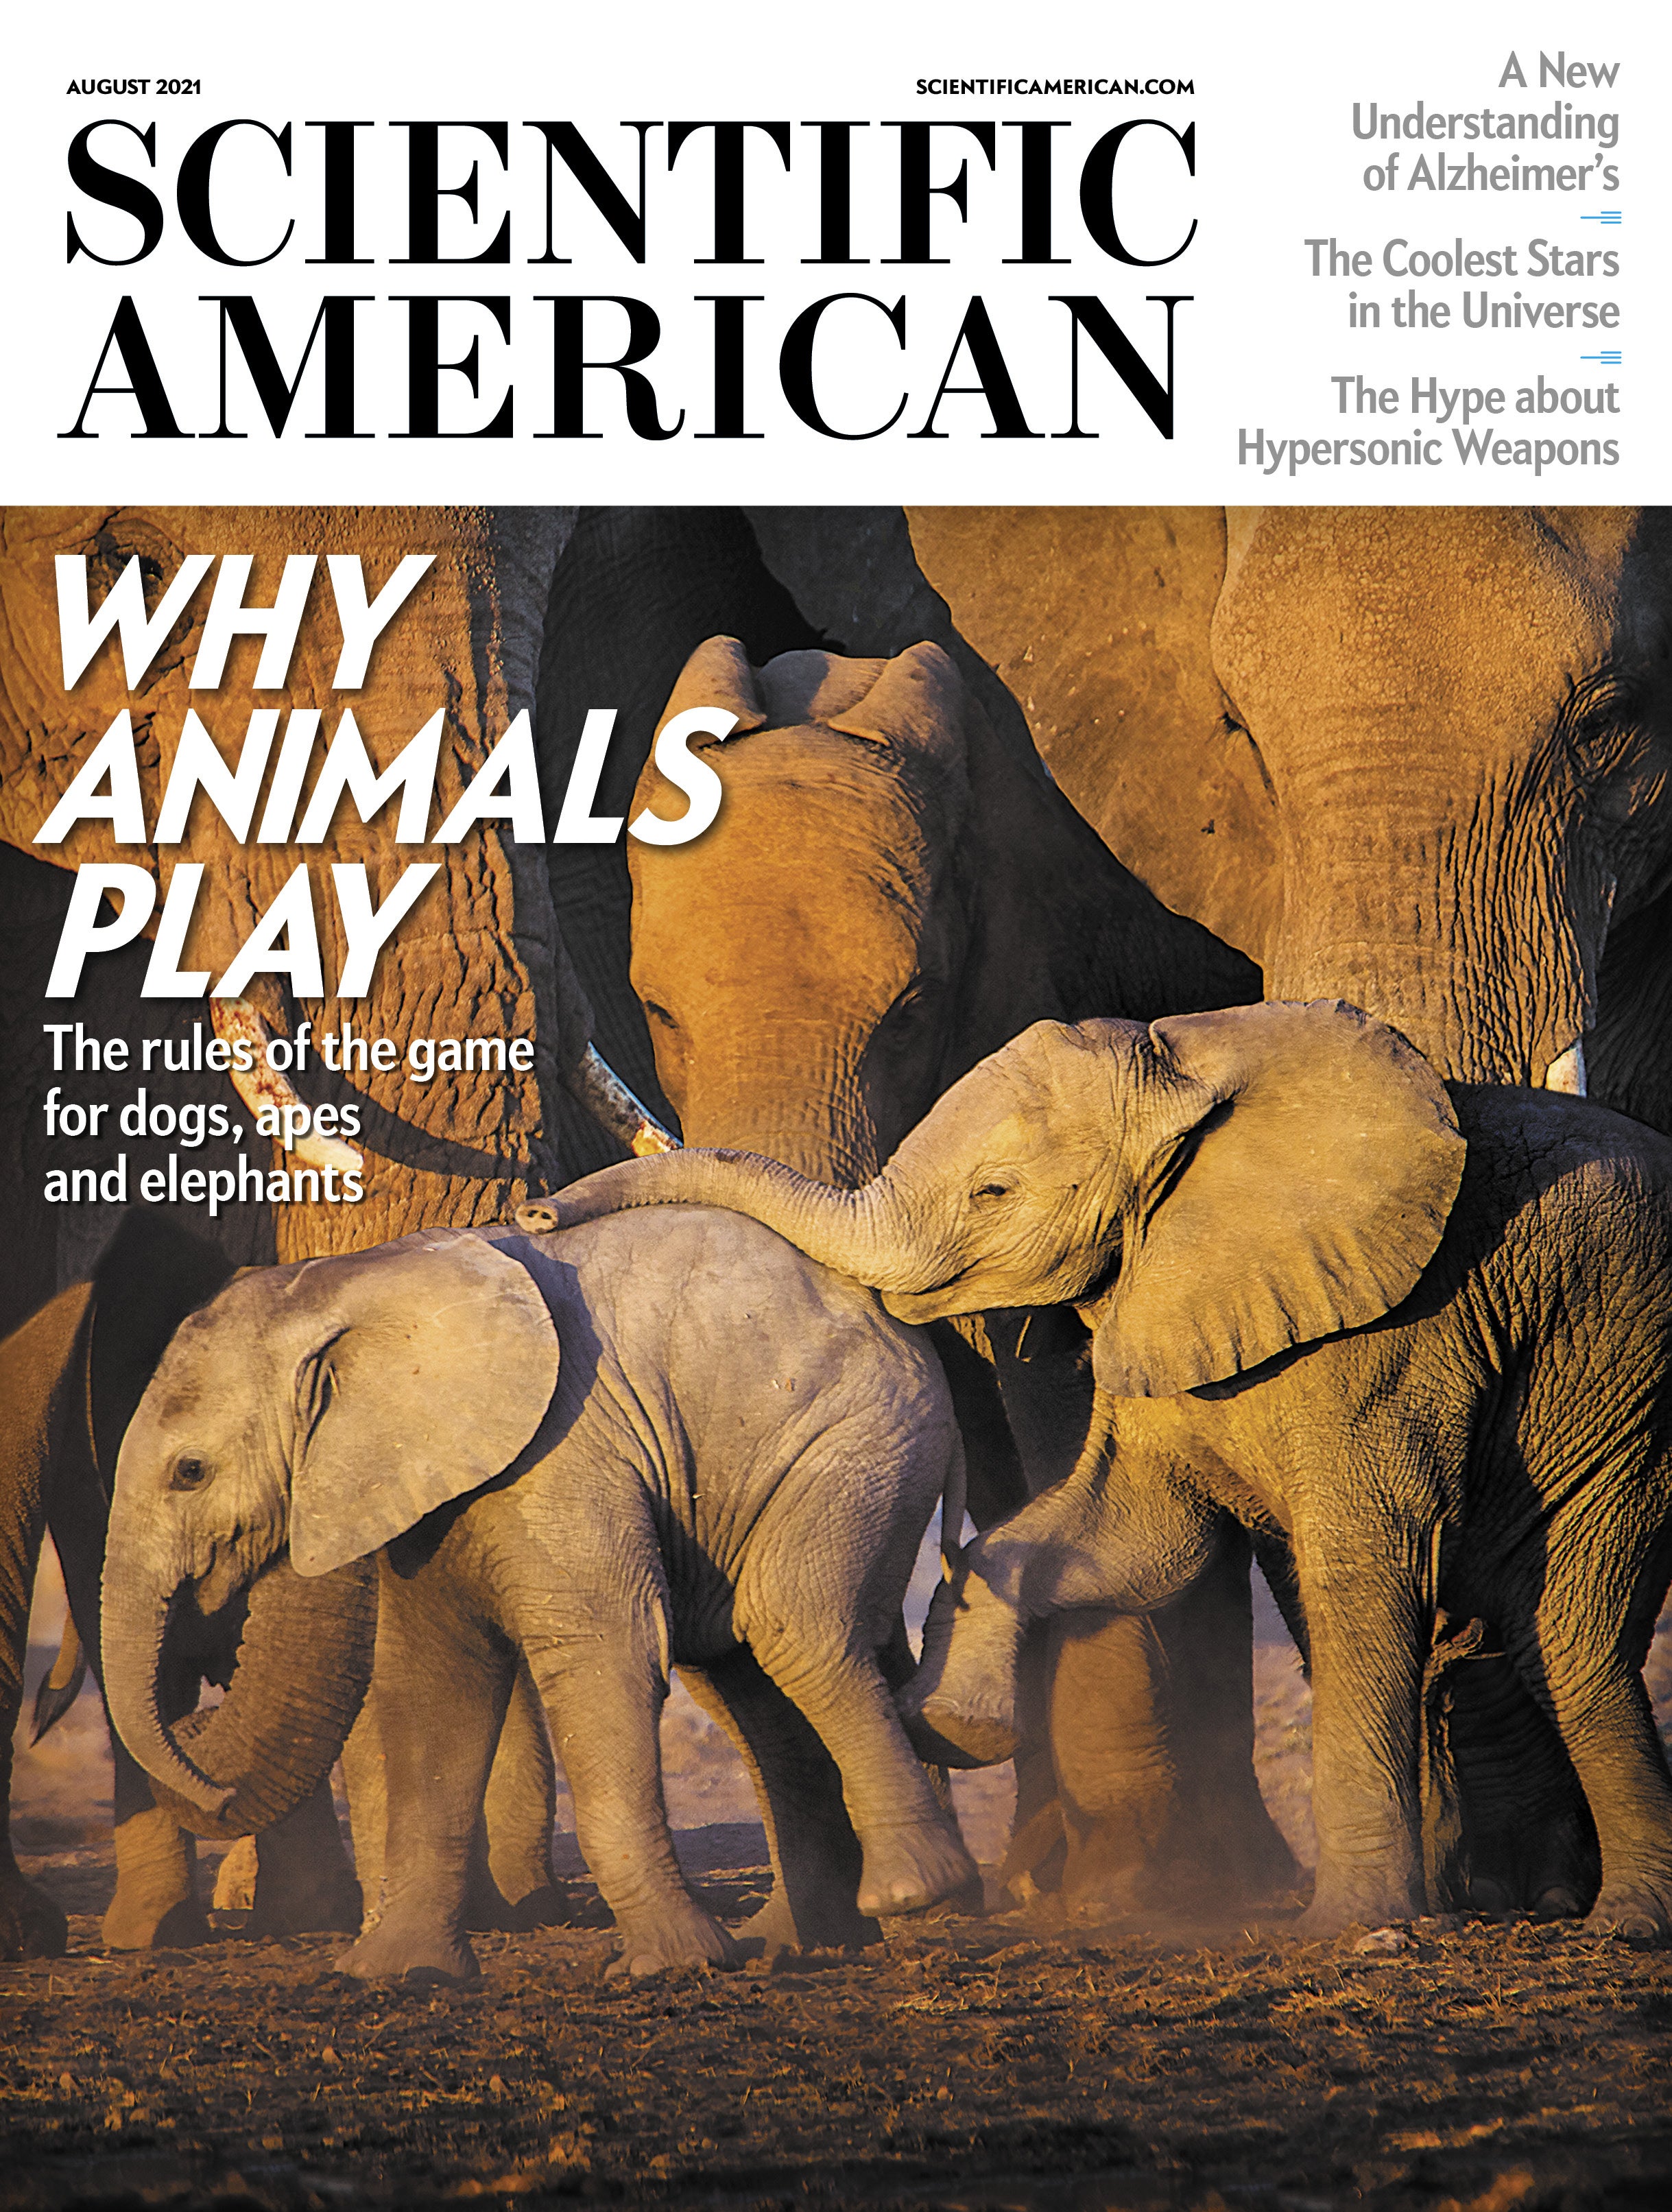 Scientific American Magazine Vol 325 Issue 2